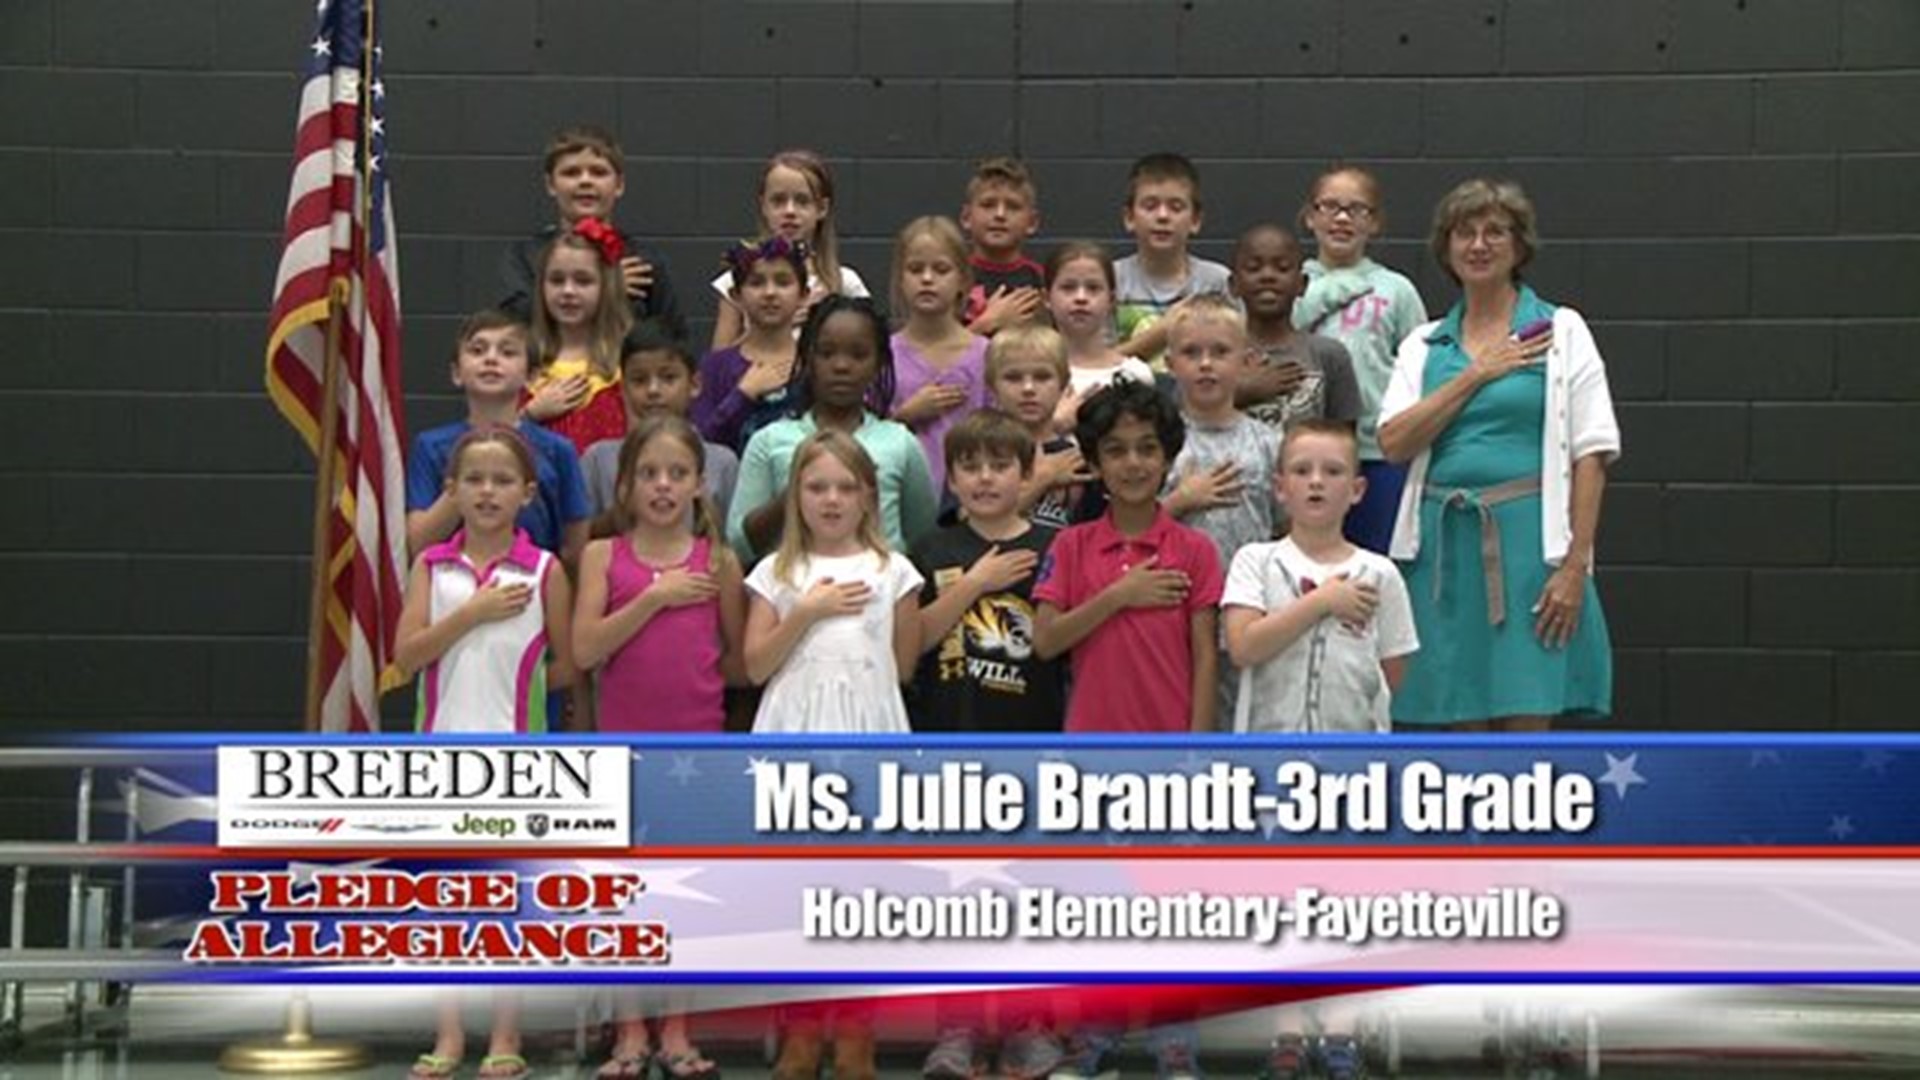 Holcomb Elementary, Fayetteville - Ms. Julie Brandt - 3rd Grade